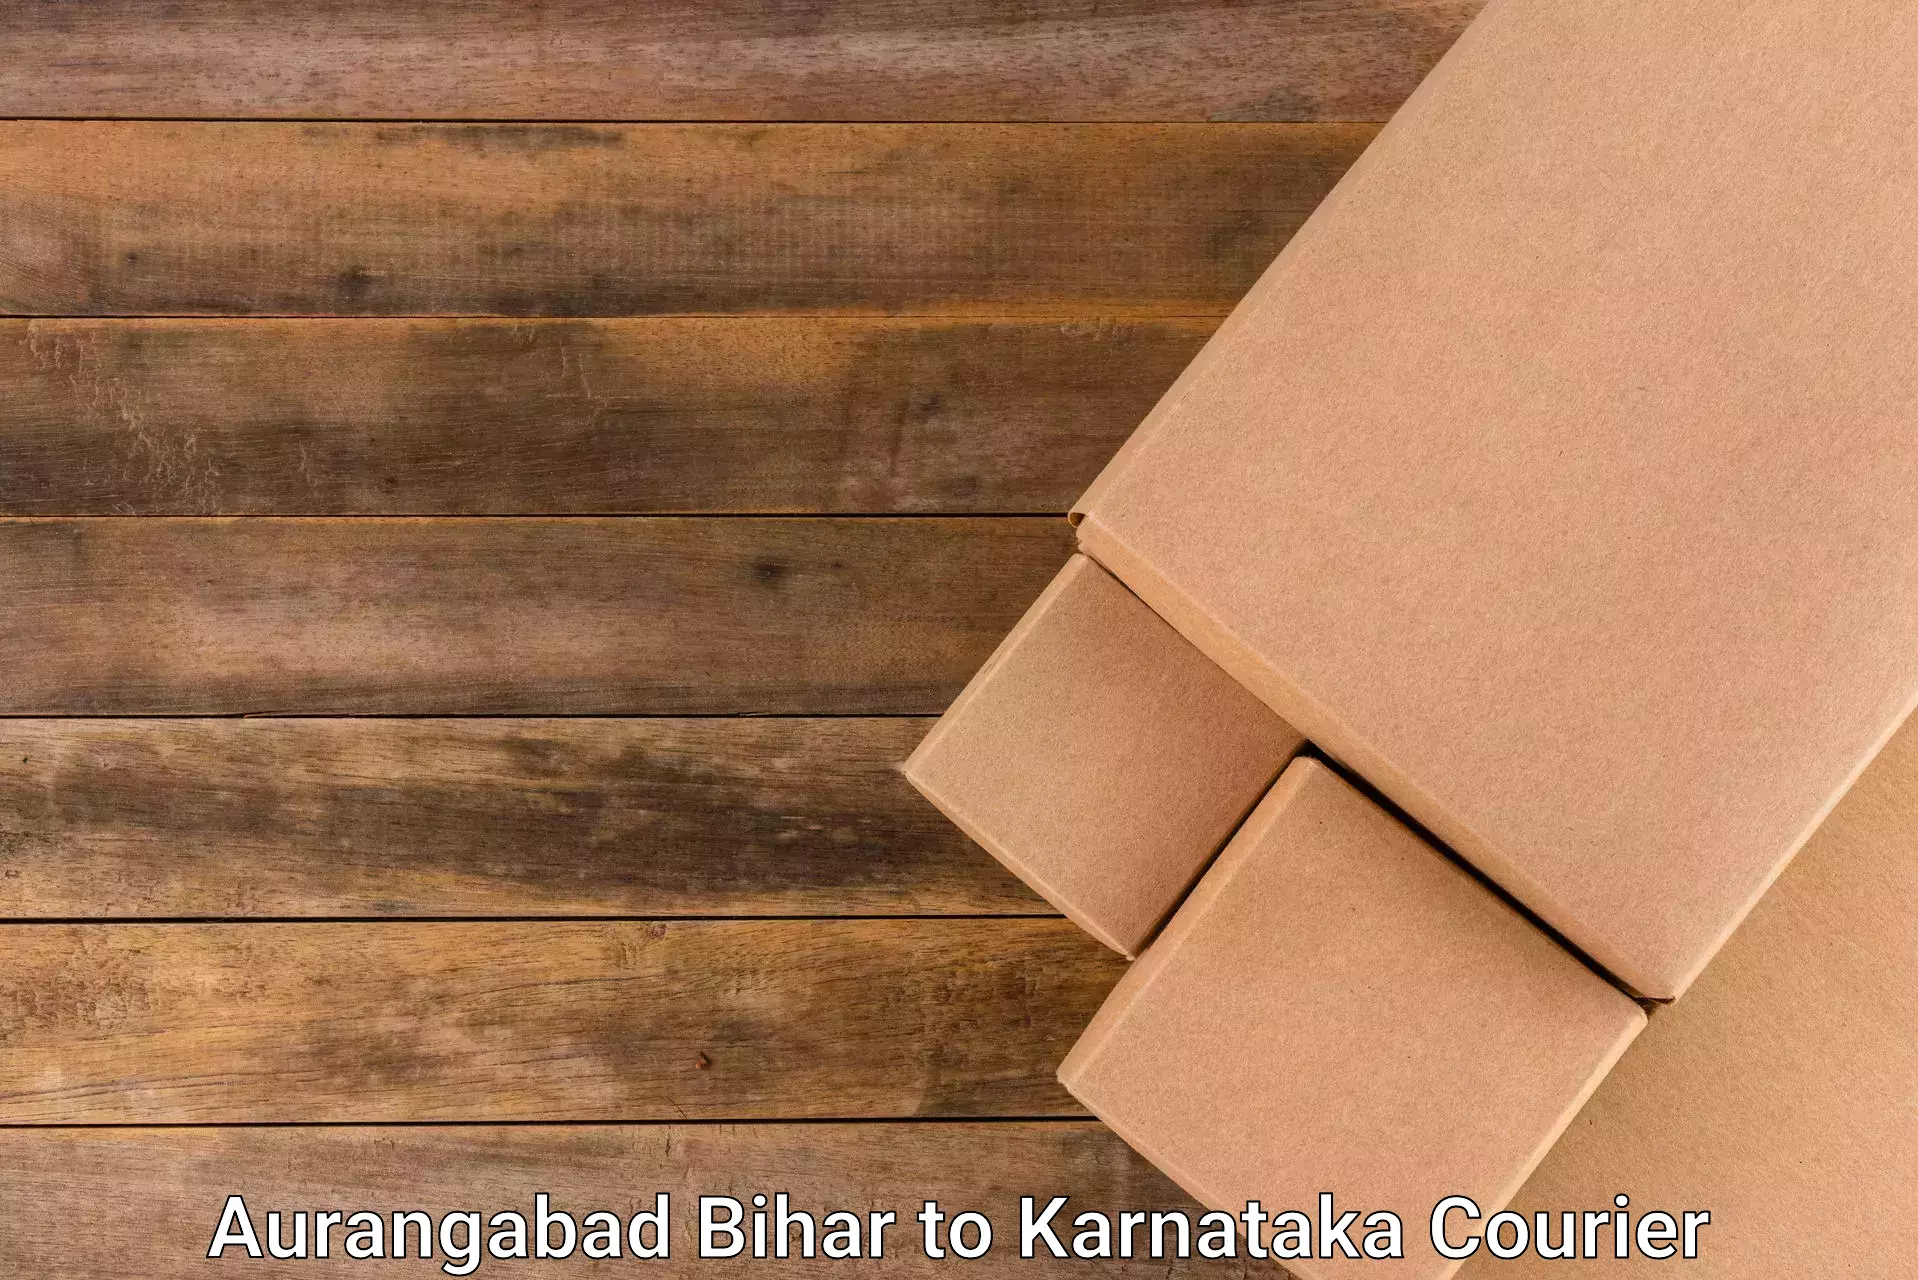 Cost-effective shipping solutions Aurangabad Bihar to Jog Falls Shimoga